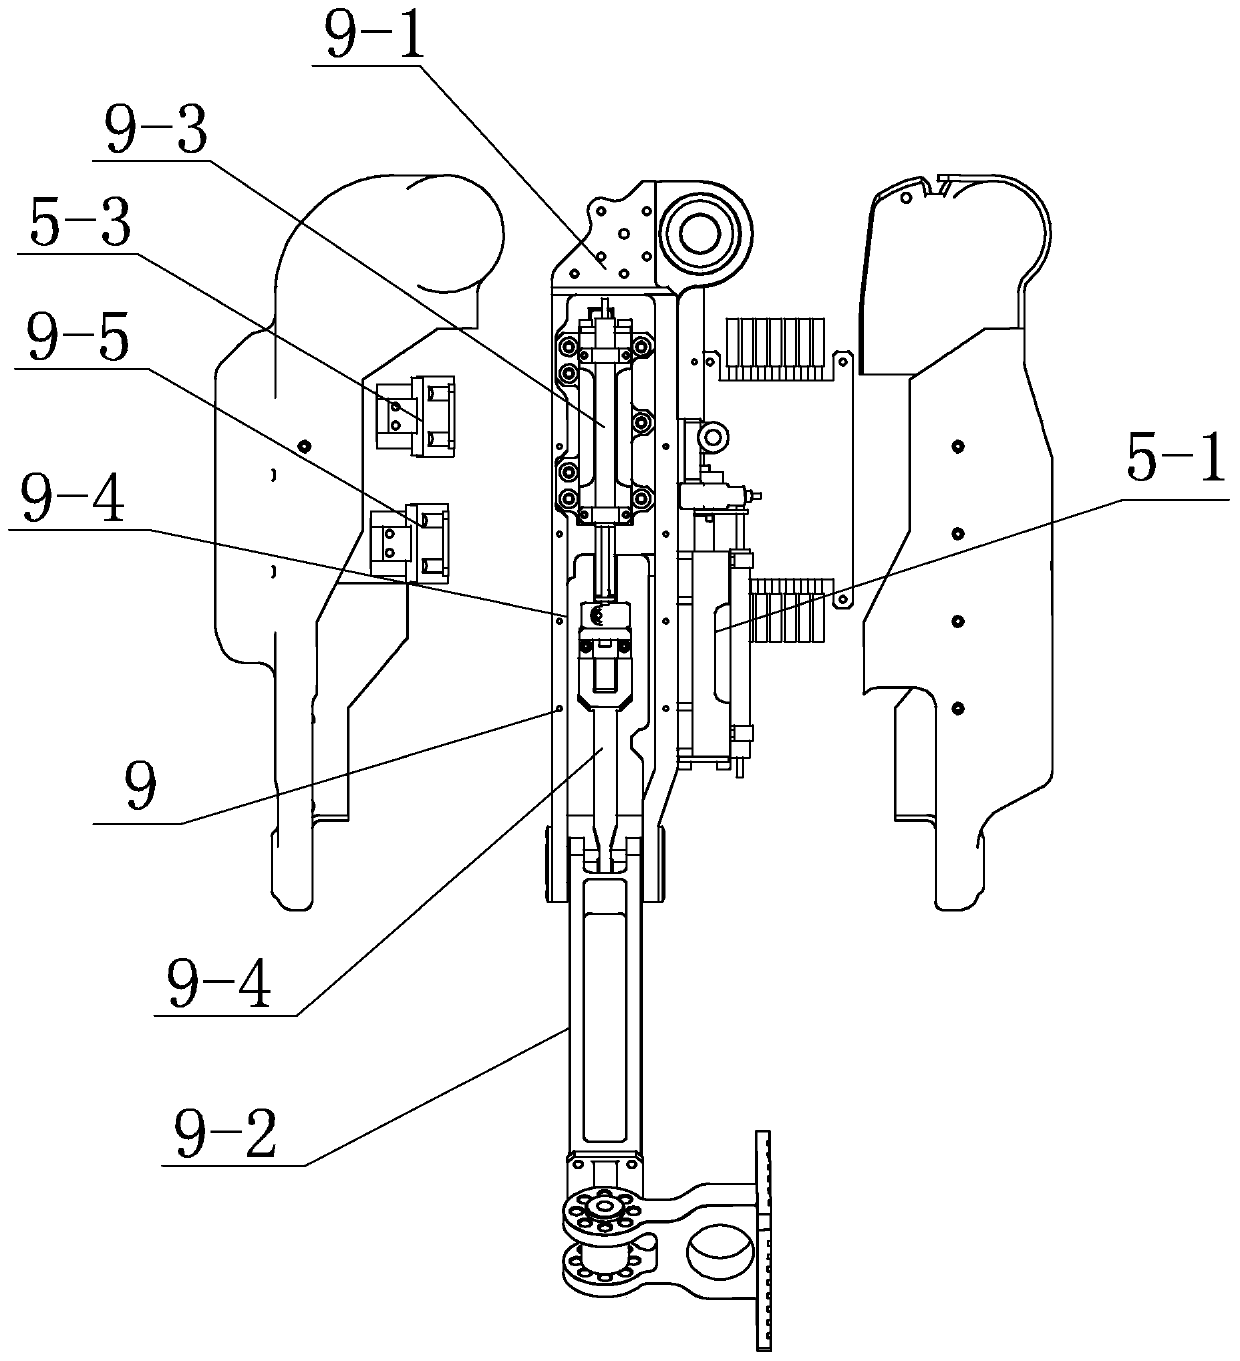 Wheel leg type humanoid robot with internal oil flowing